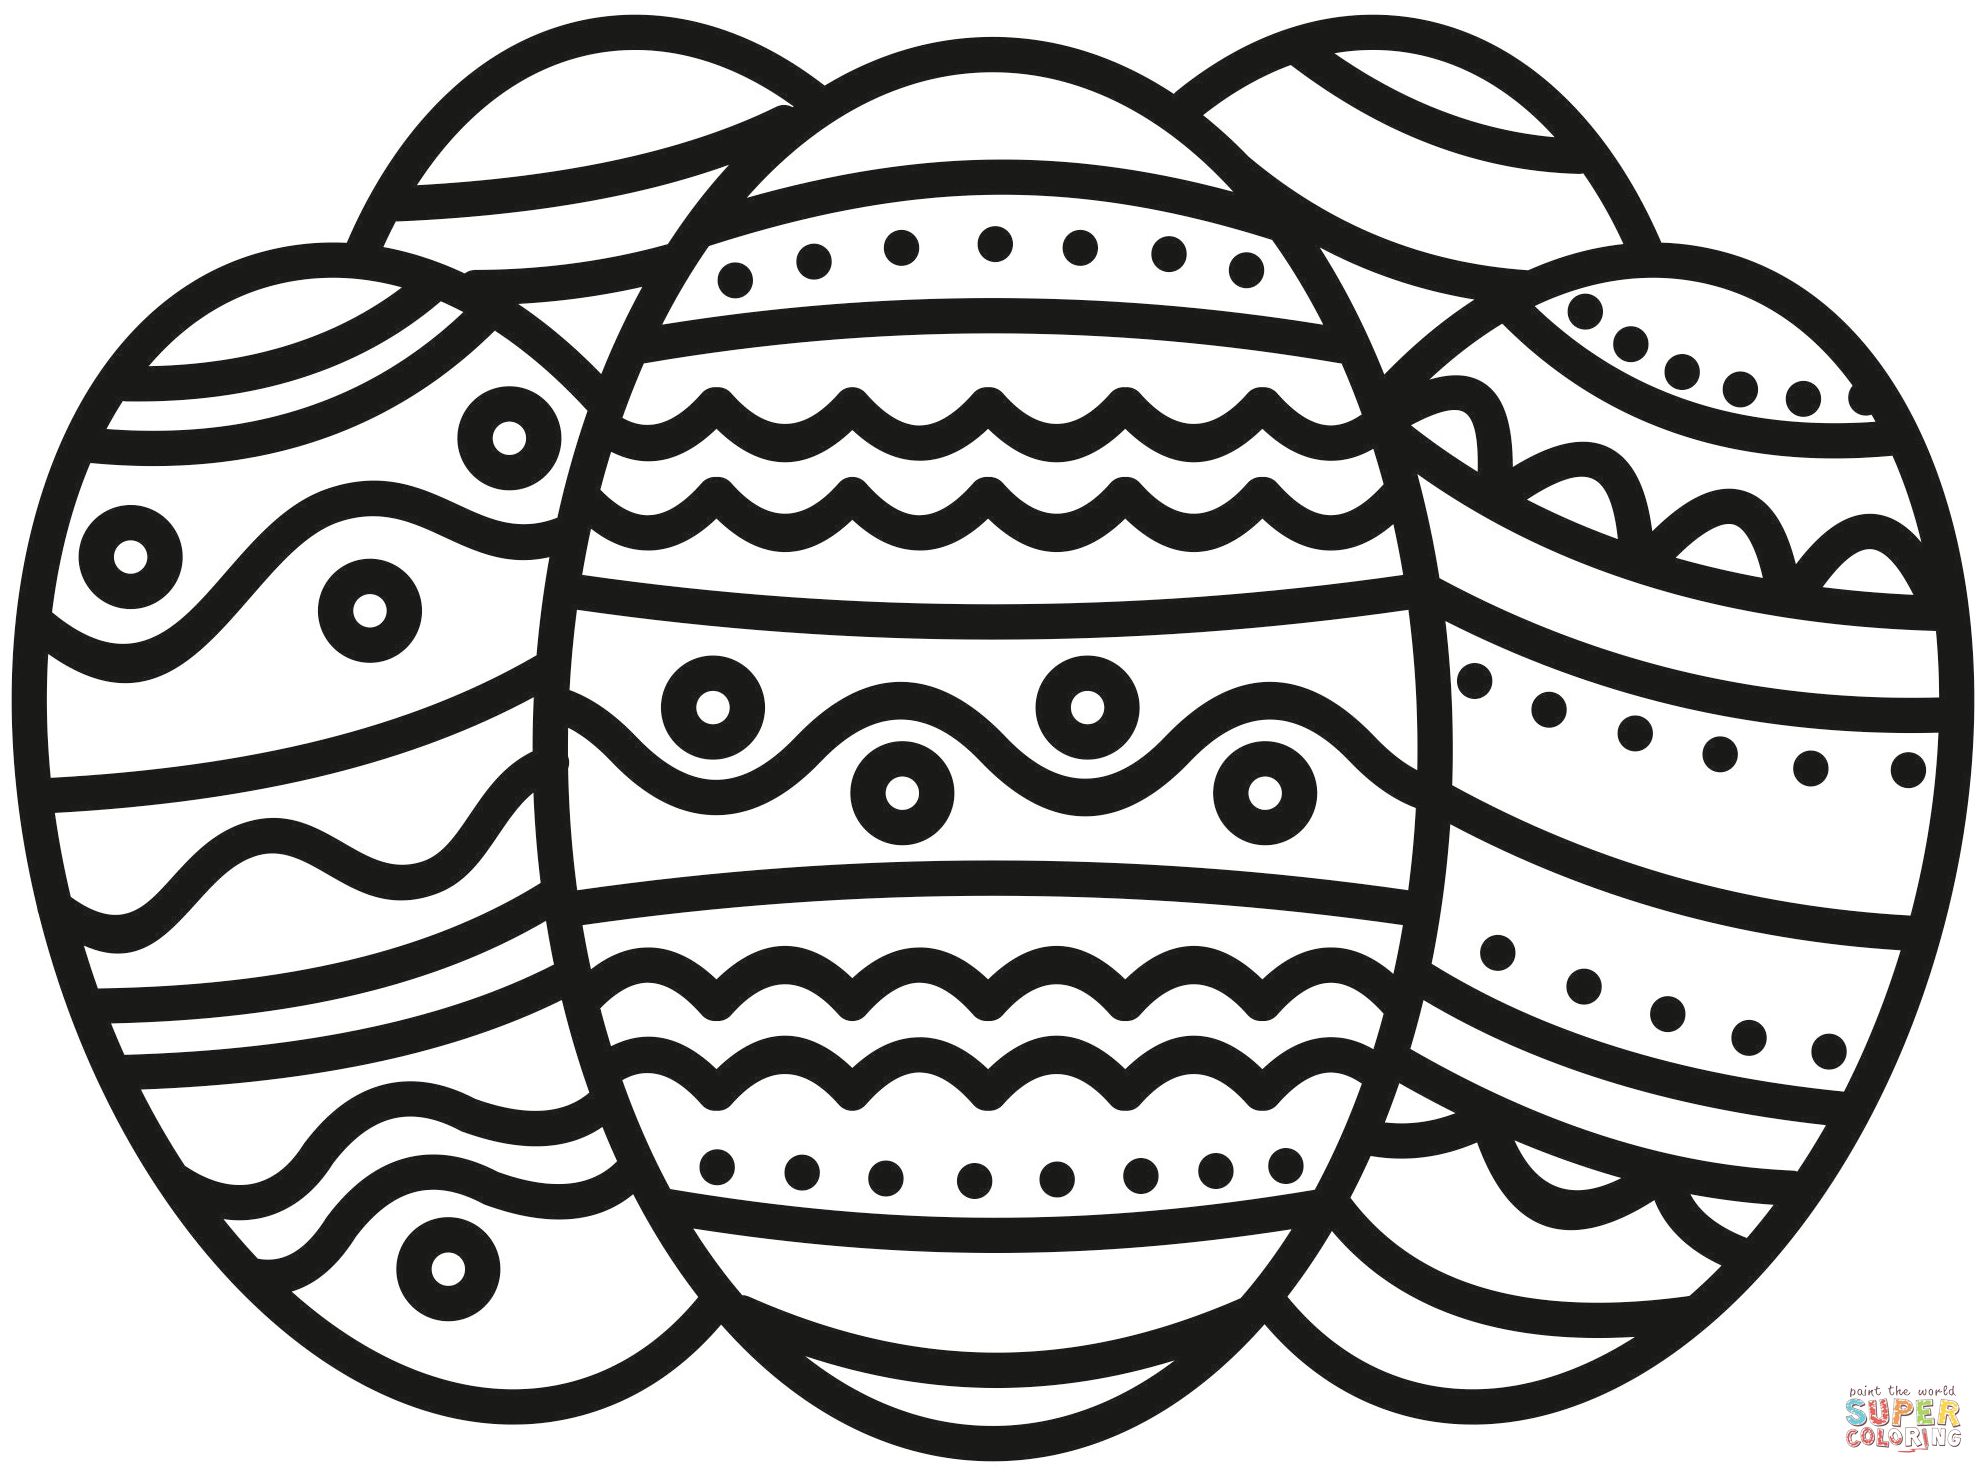 Dibujo de huevos de pascua para colorear dibujos para colorear imprimir gratis